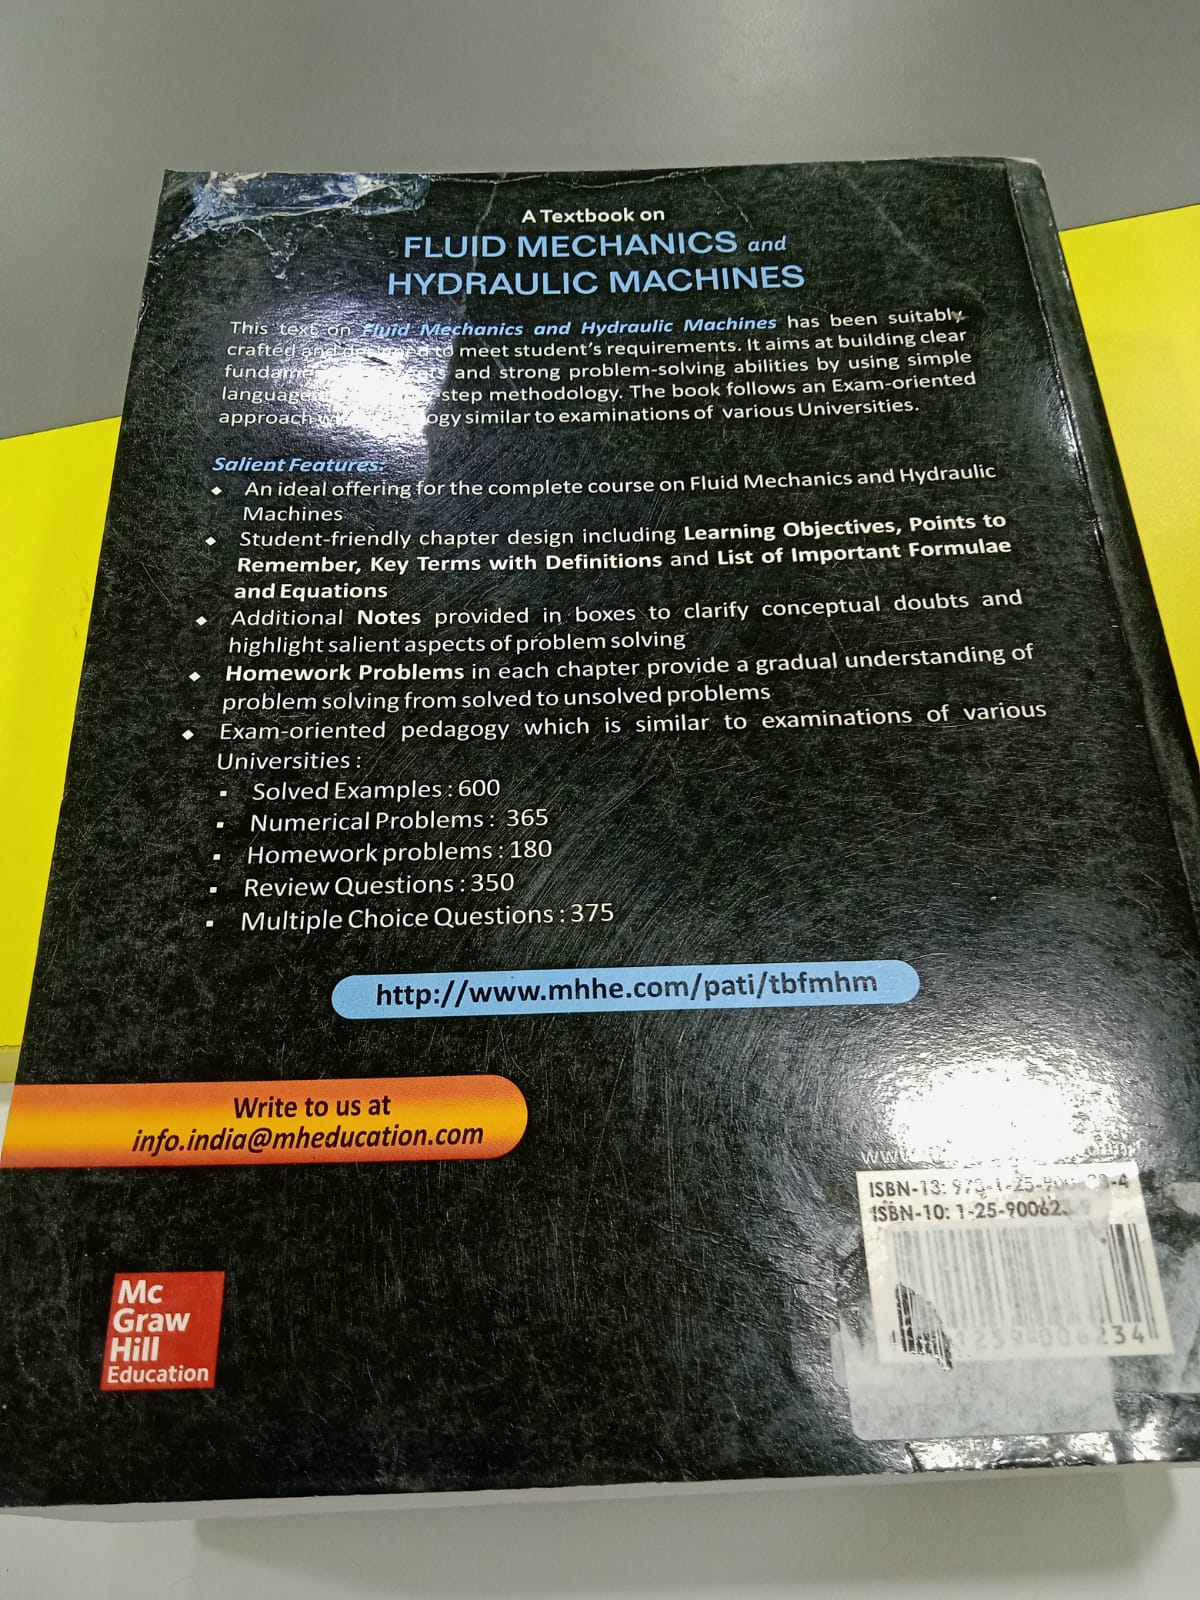 A Textbook on Fluid Mechanics and Hydraulic Machines